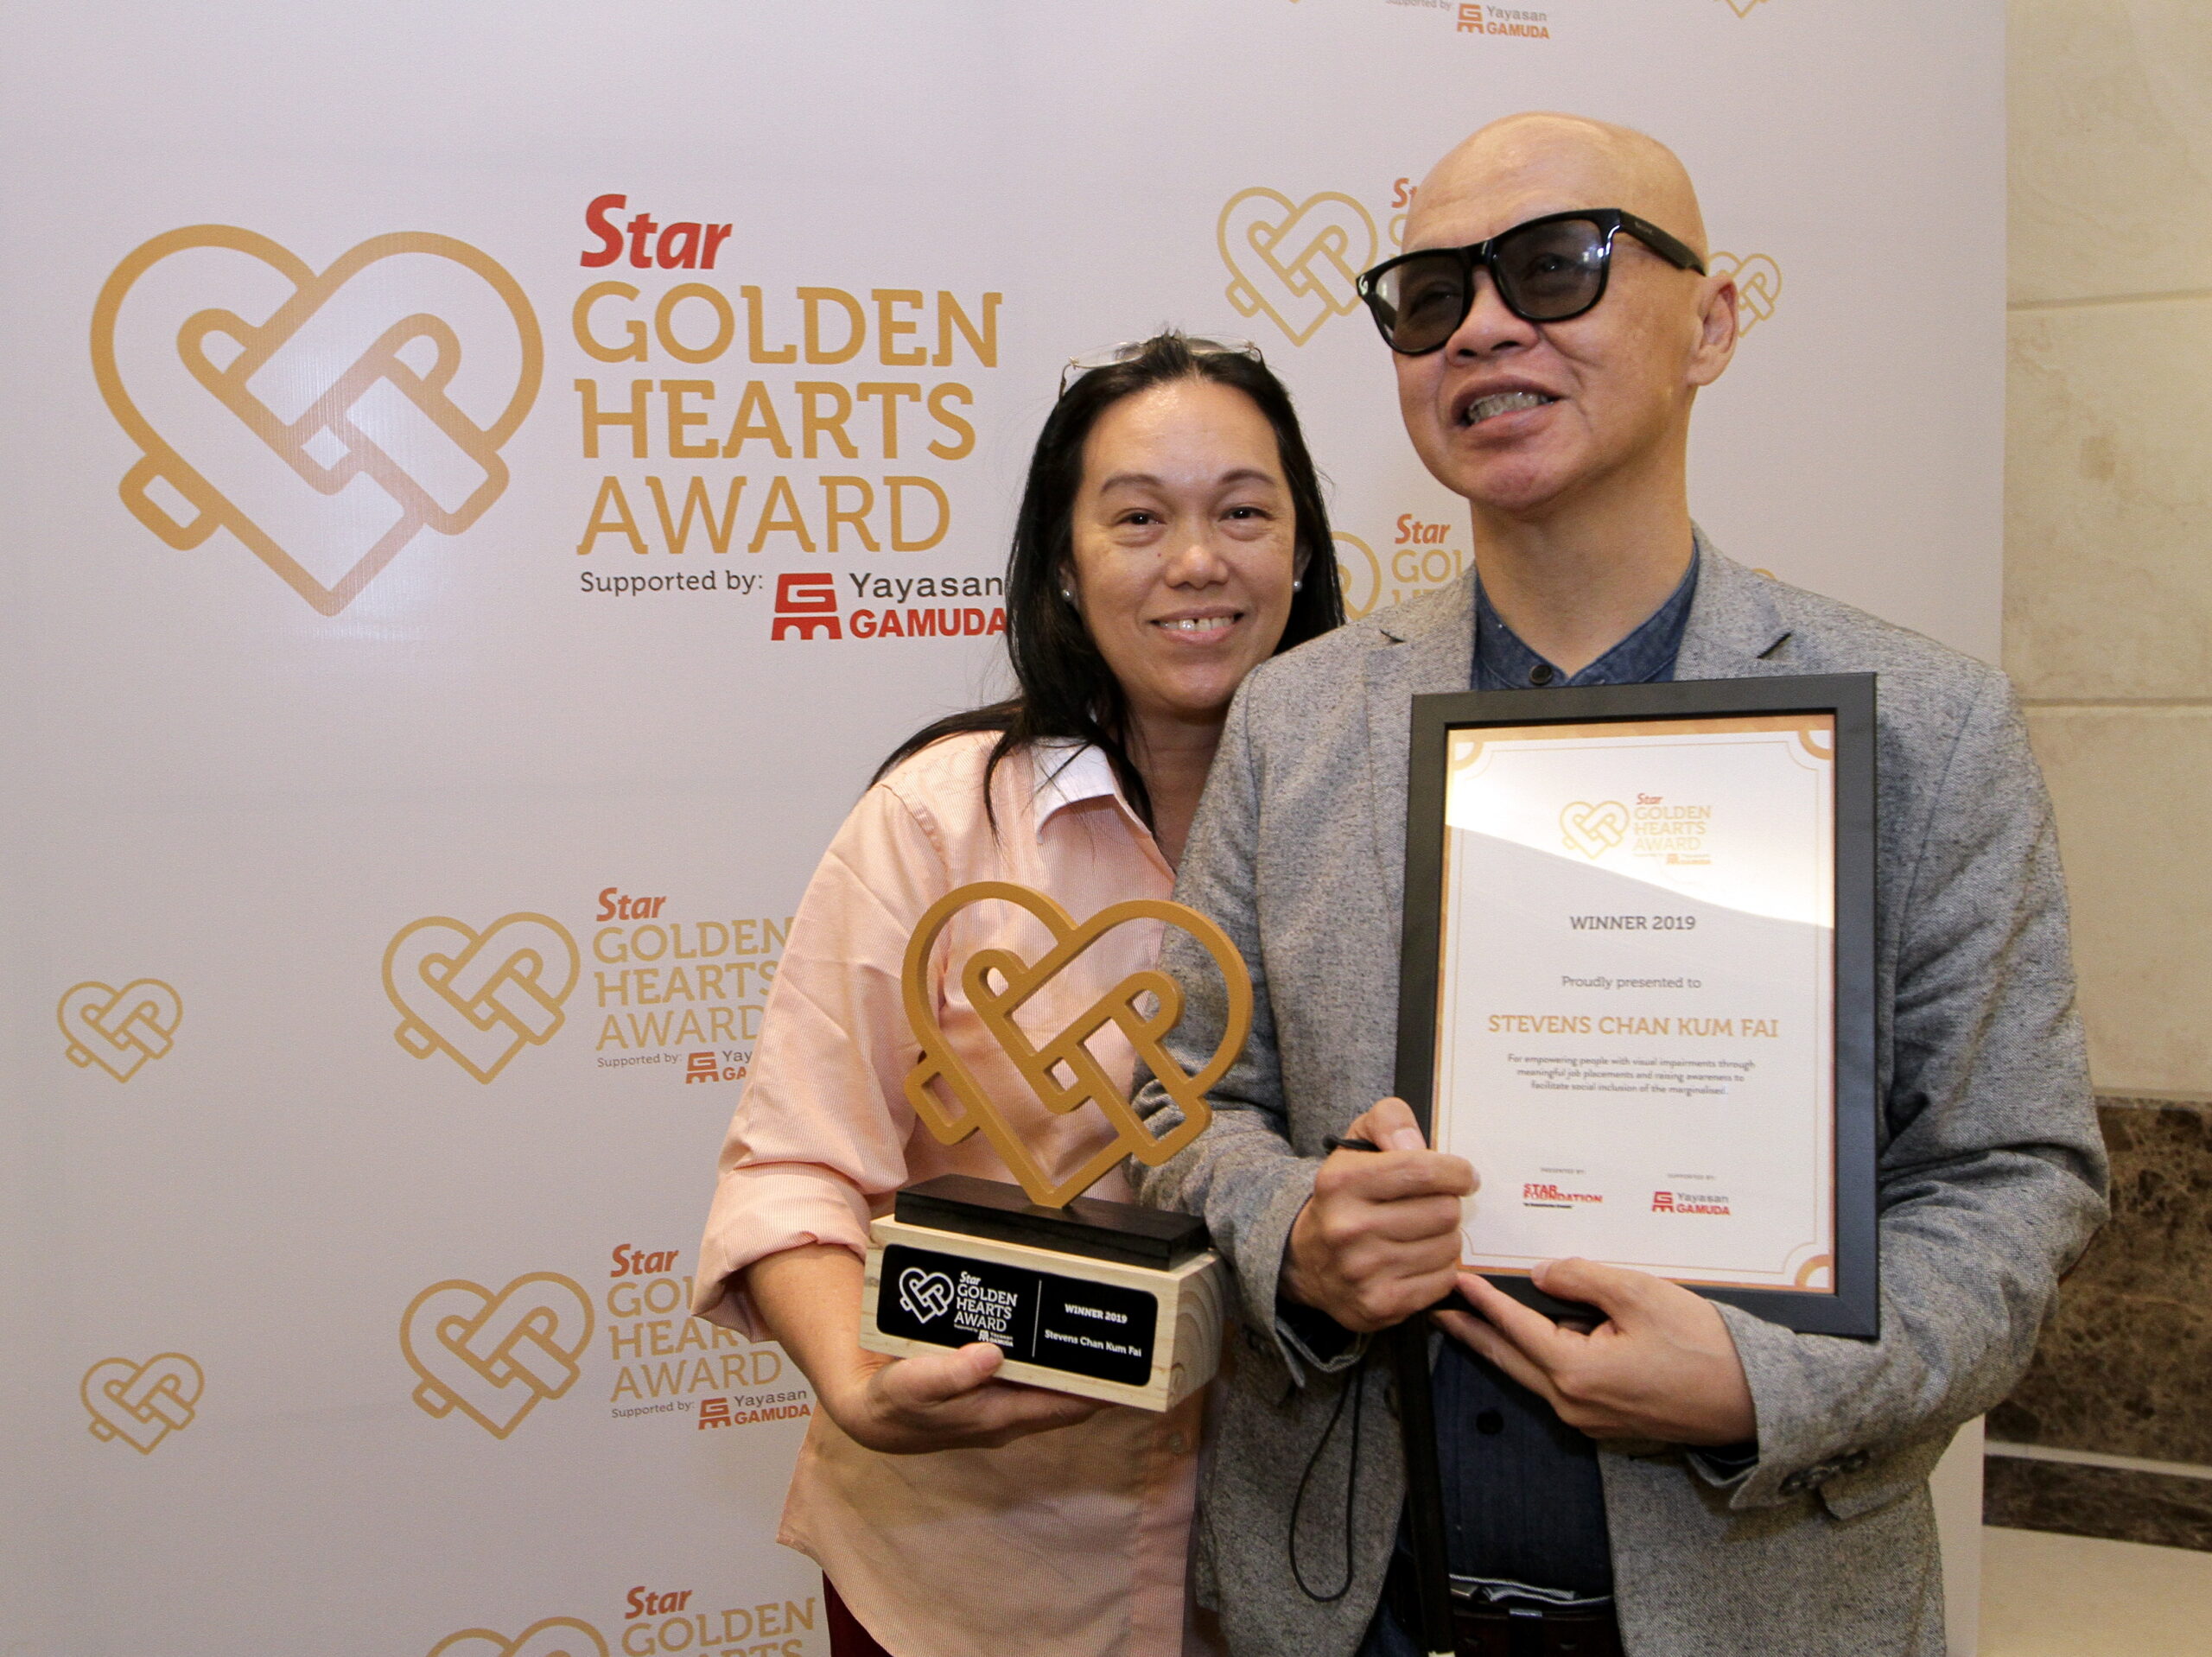 Star golden hearts award 2019 : awards presentation ceremony.